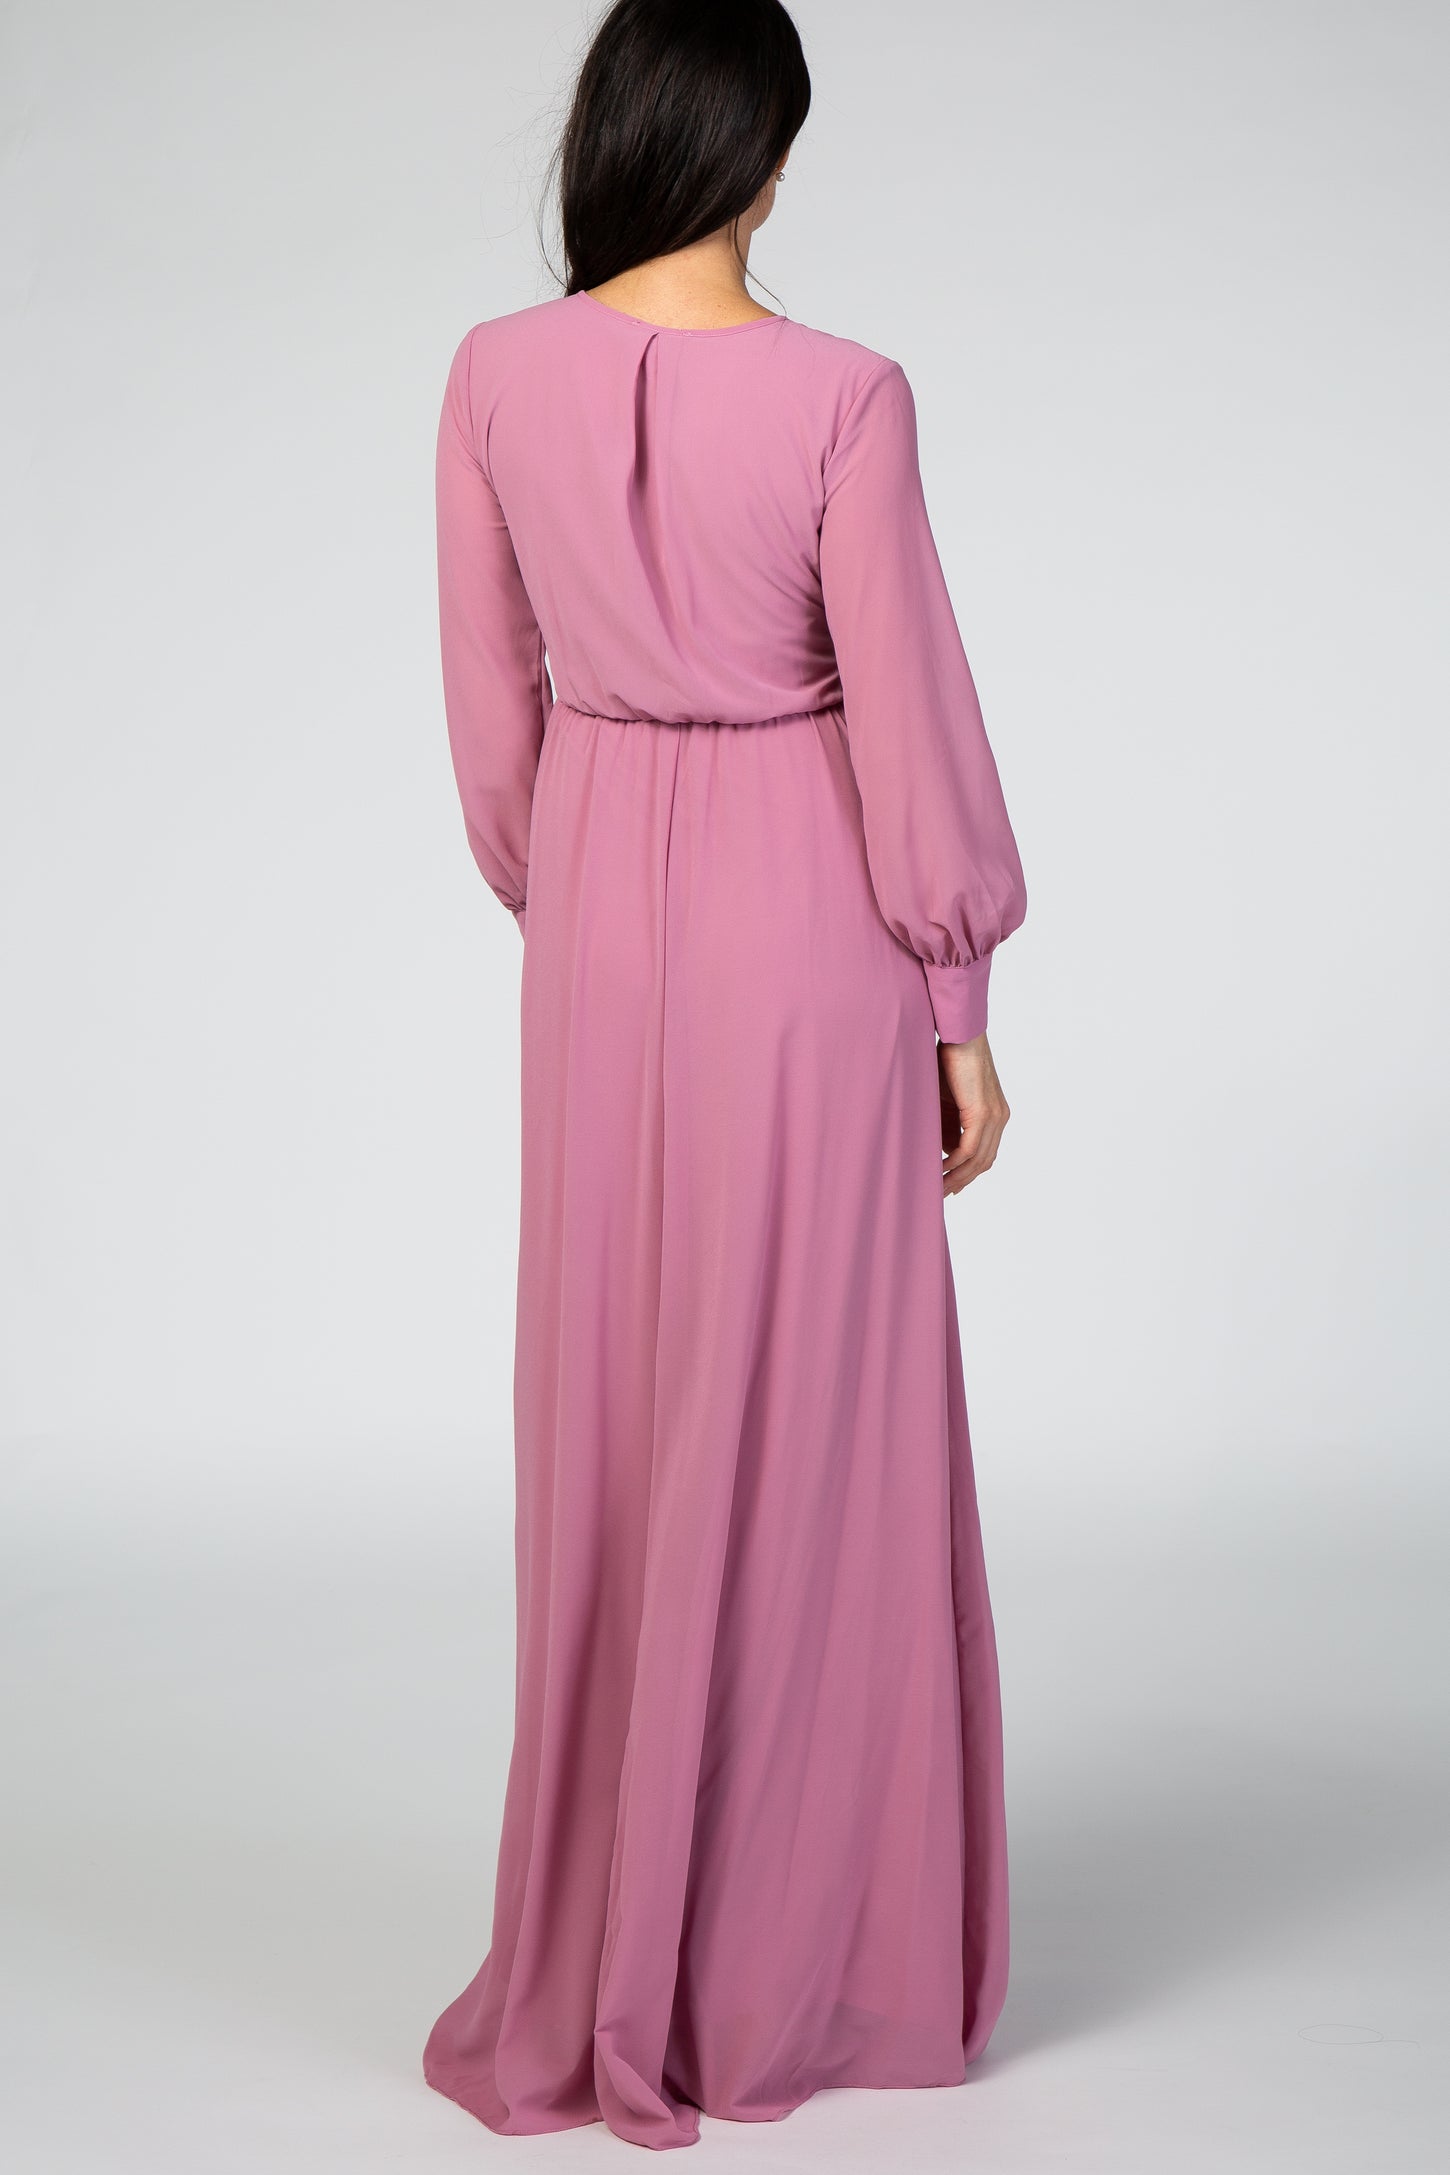 Lavender Chiffon Long Sleeve Maxi Dress